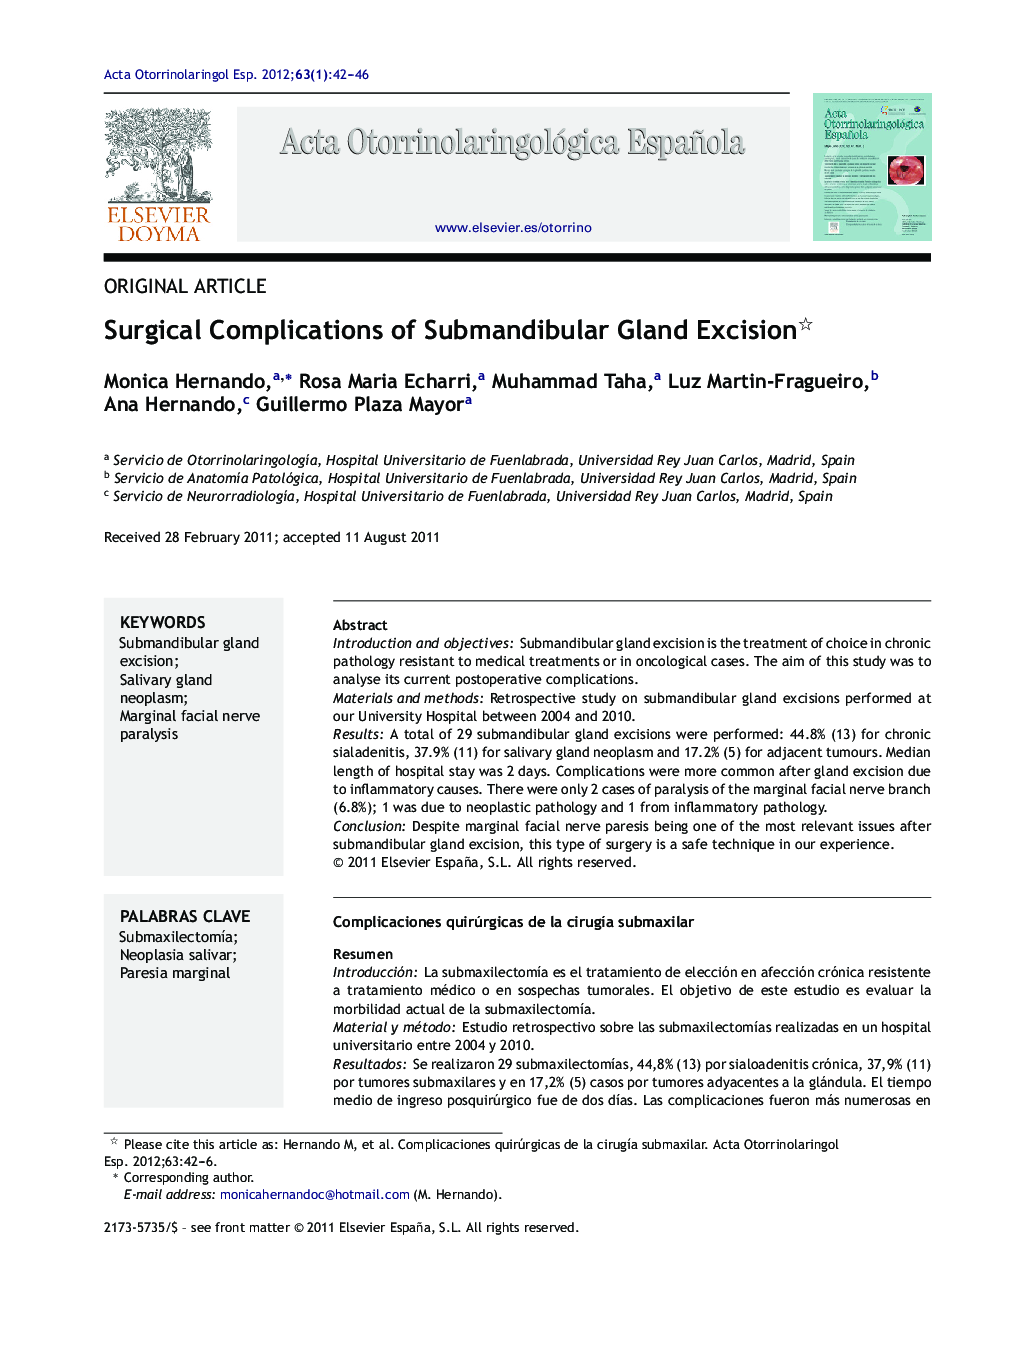 Surgical Complications of Submandibular Gland Excision 